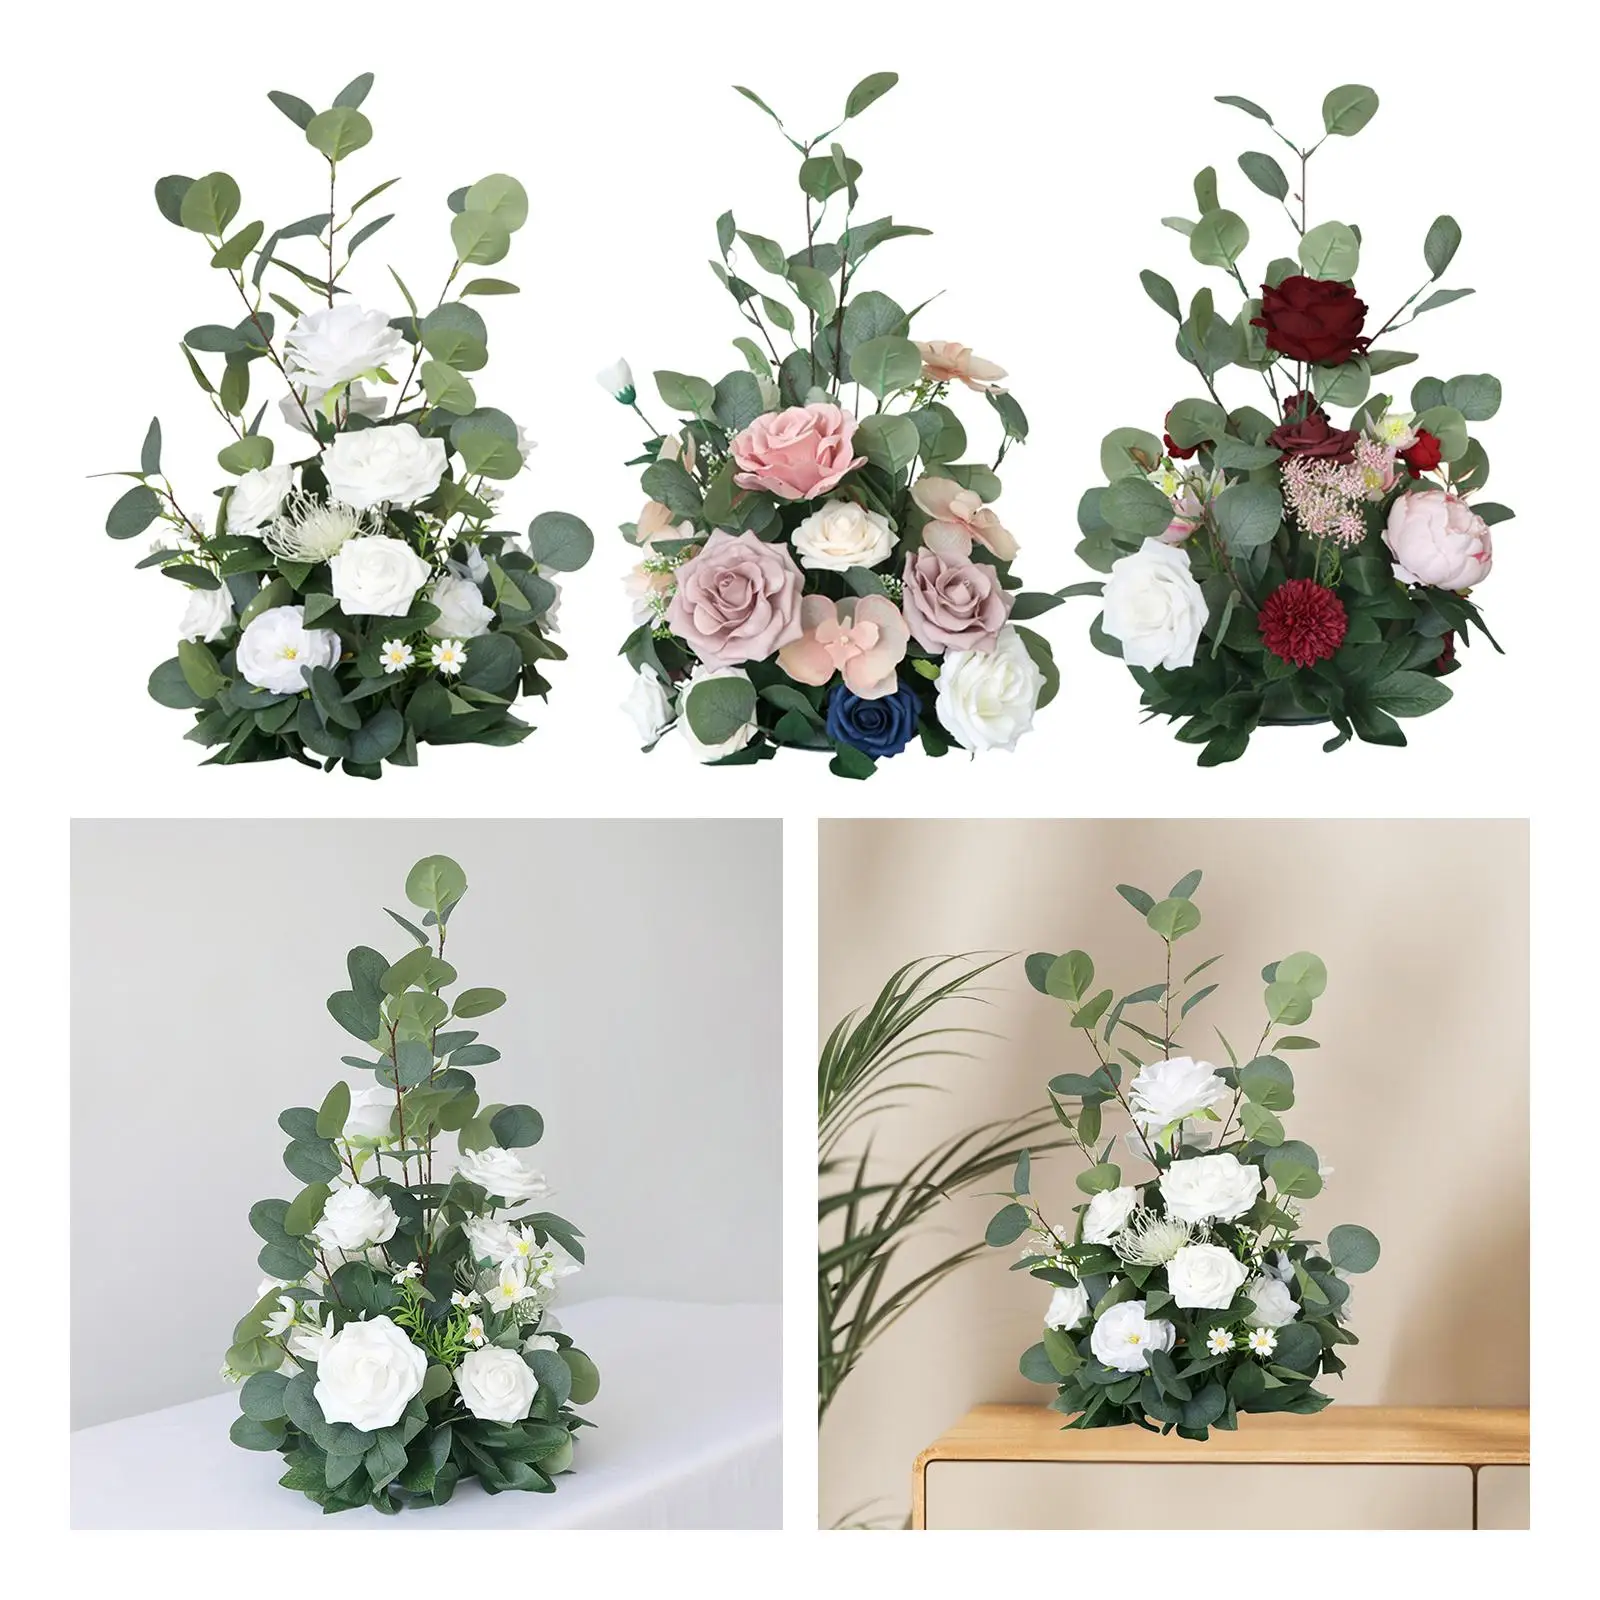 Artificial Flowers Flower Arrangement Realistic Table Centerpieces Wedding Centerpiece for Wedding Festive Ceremony Events Home